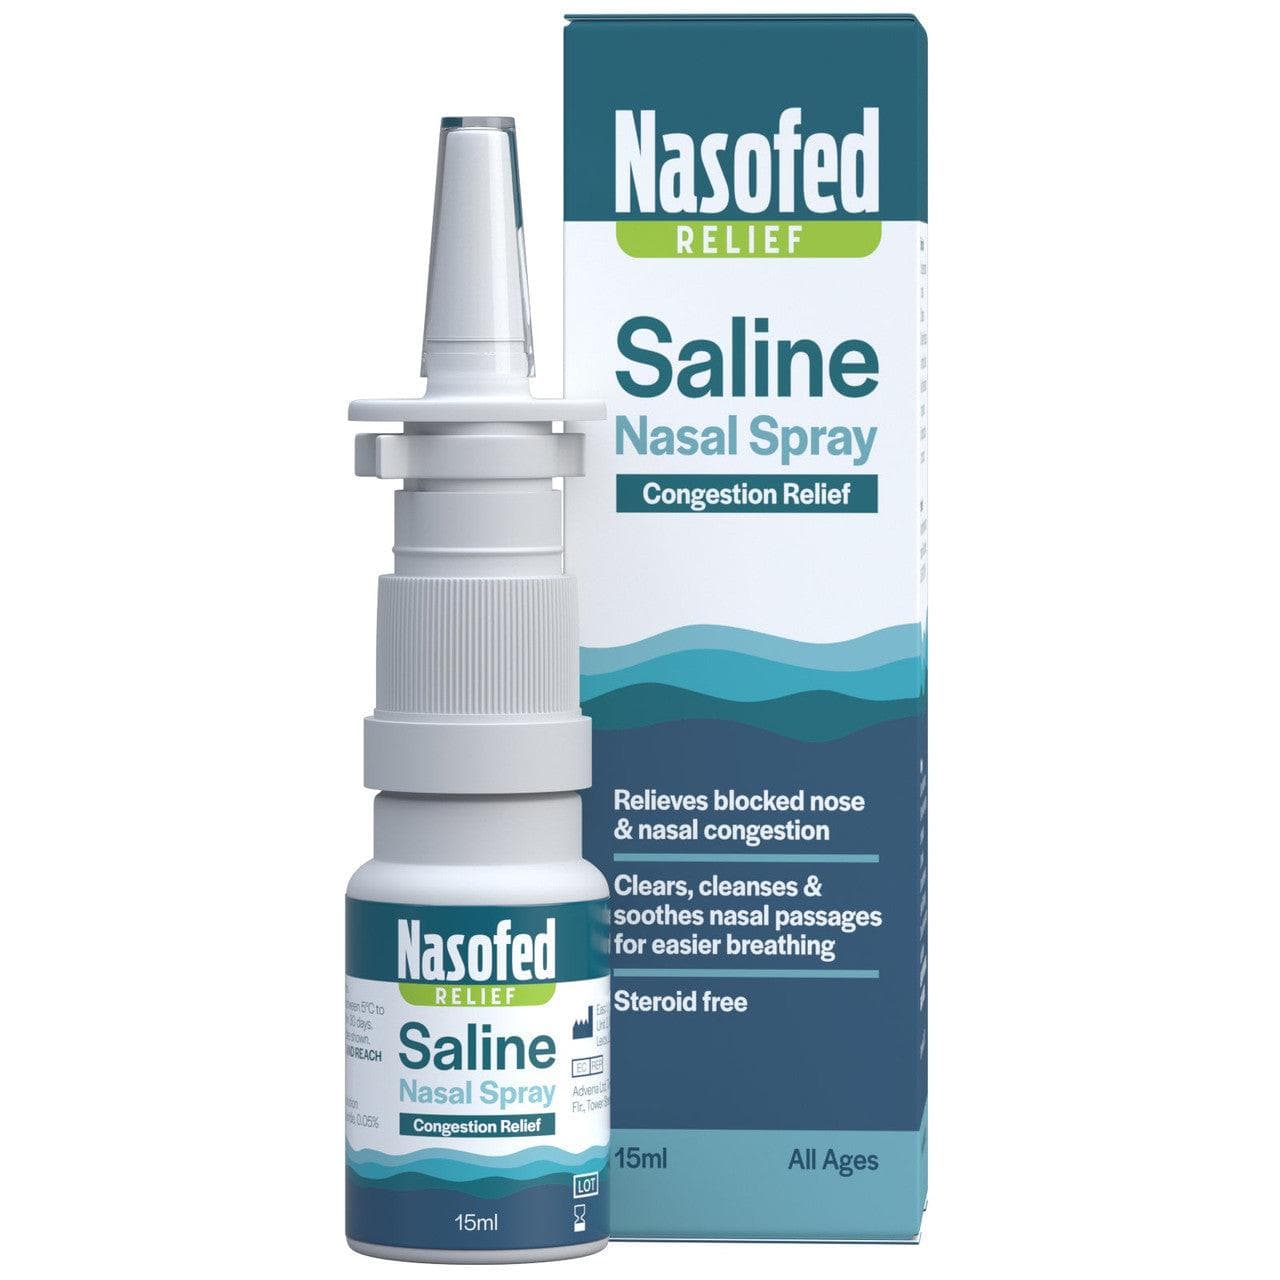 Nasofed Relief Saline Nasal Spray for Congestion Relief - welzo